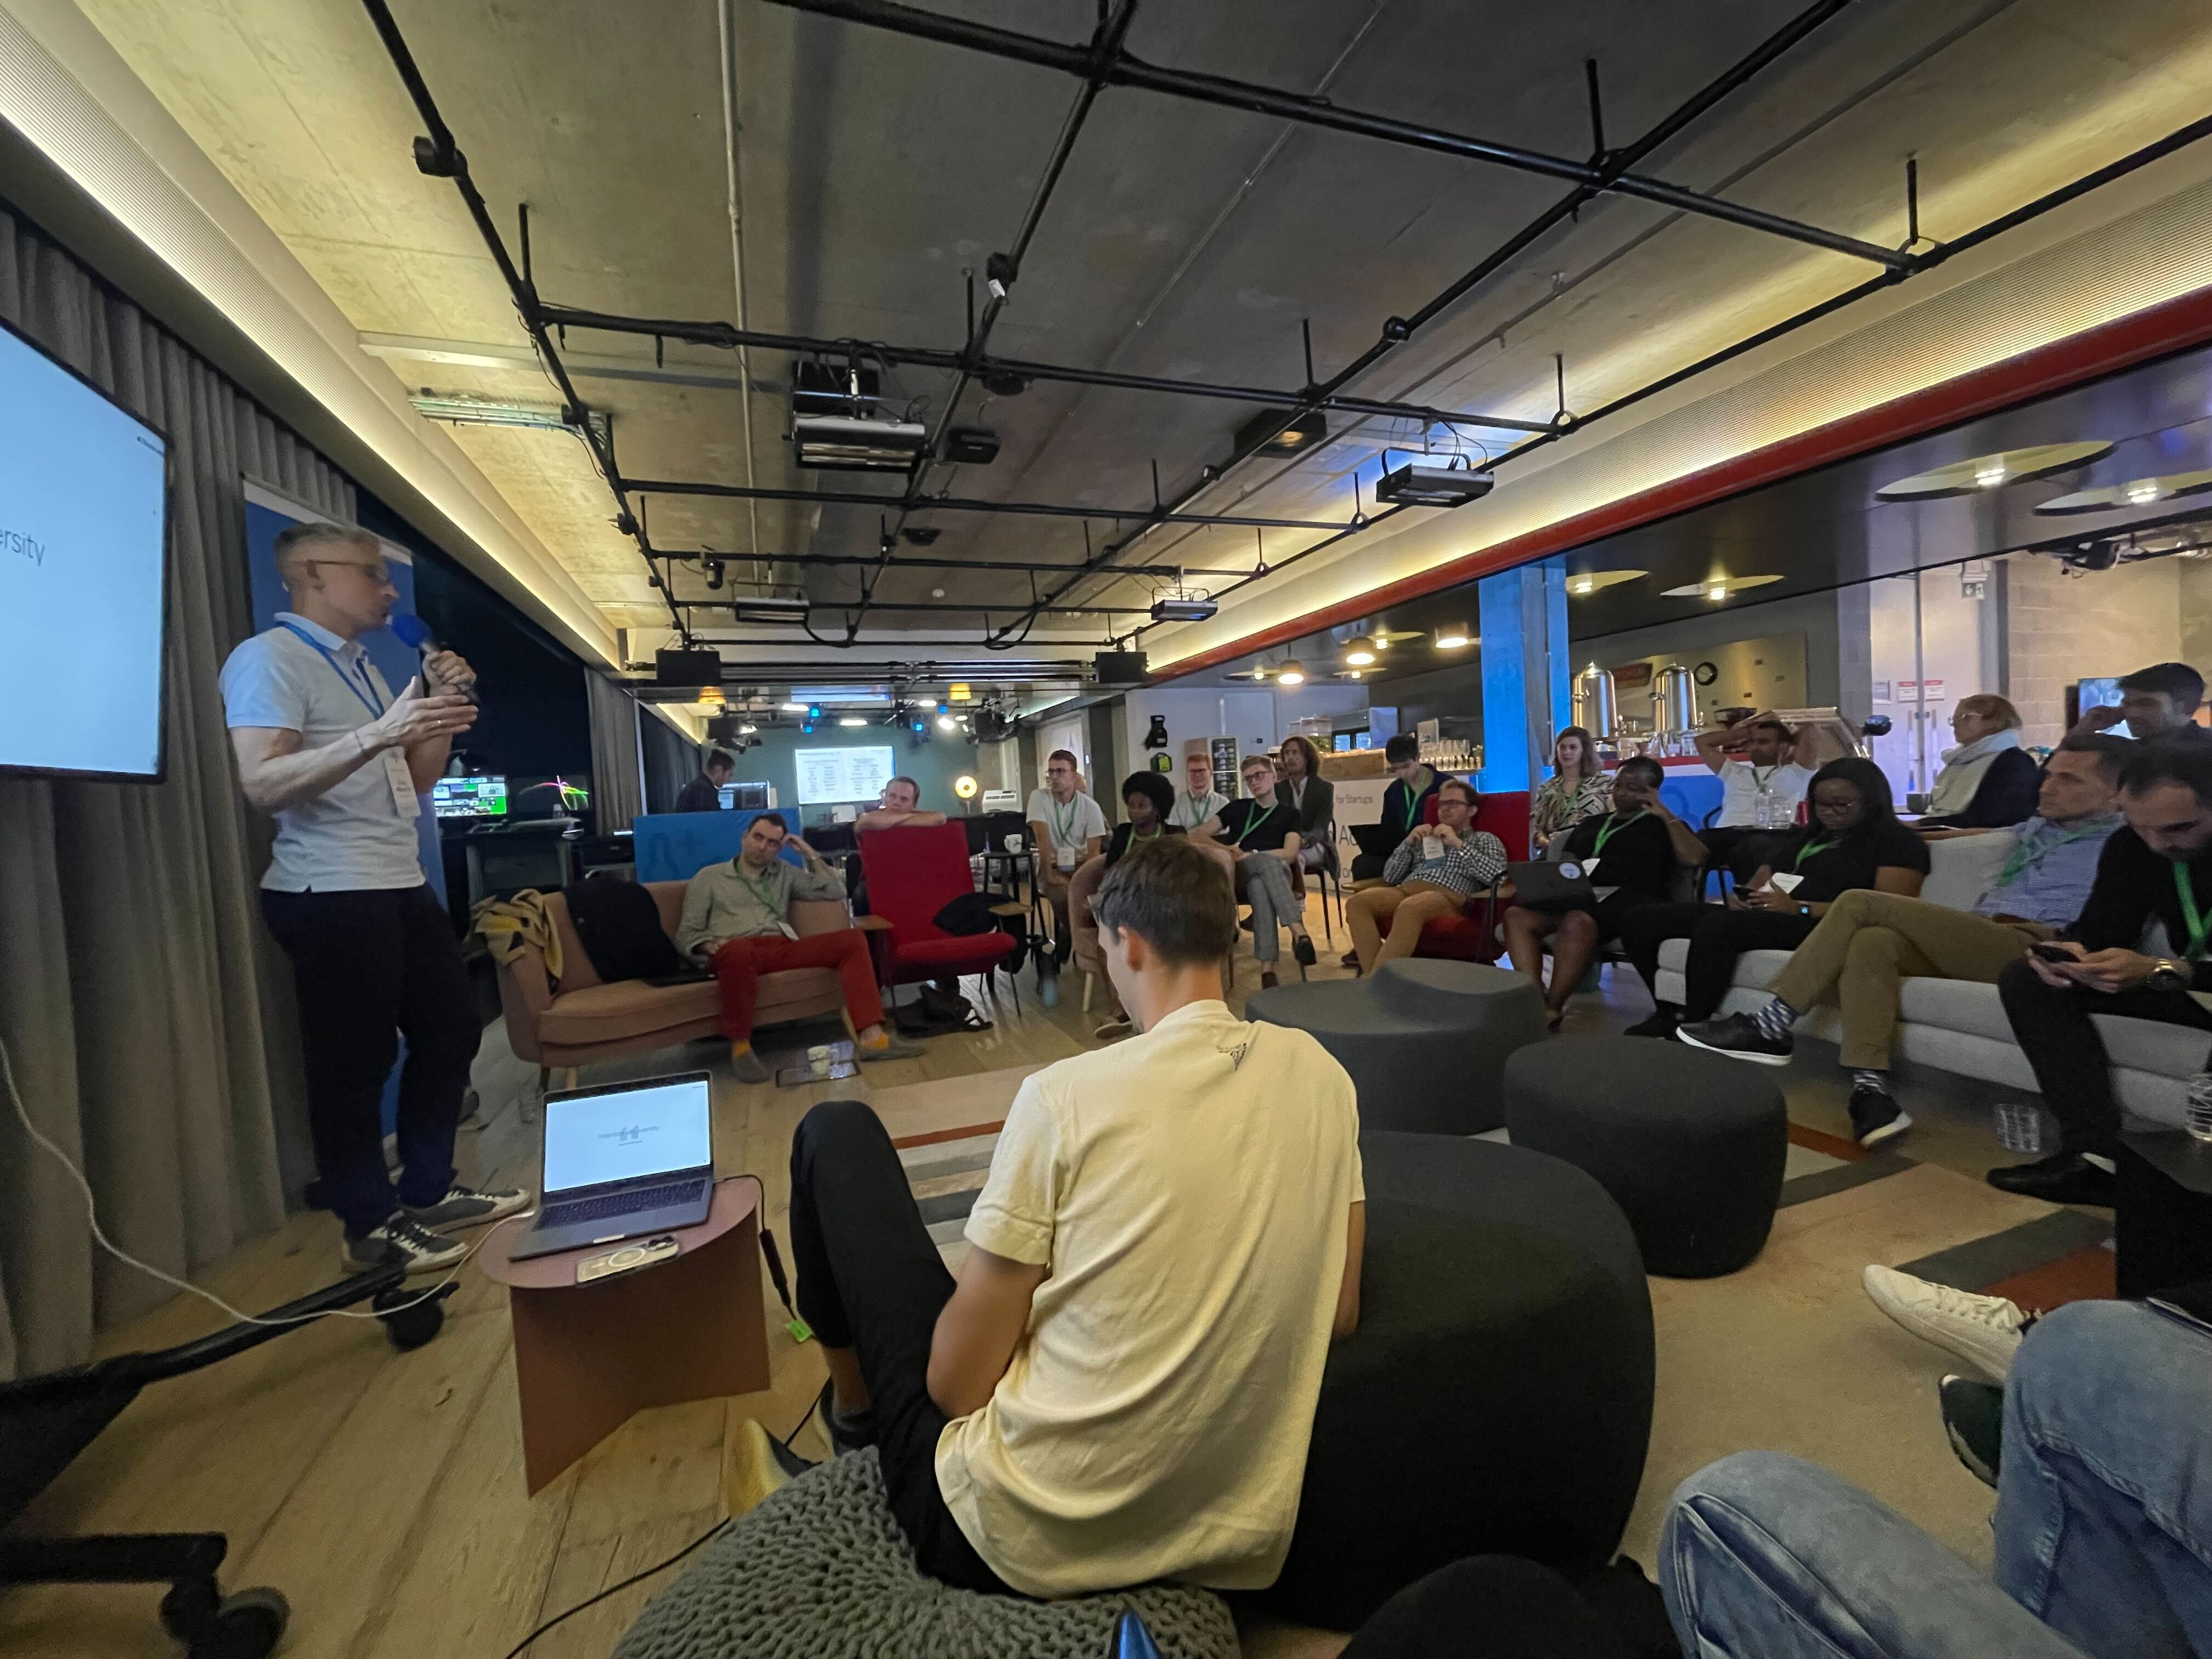 Leadership Workshop led by Greg Albrecht, an Executive Coach at Google